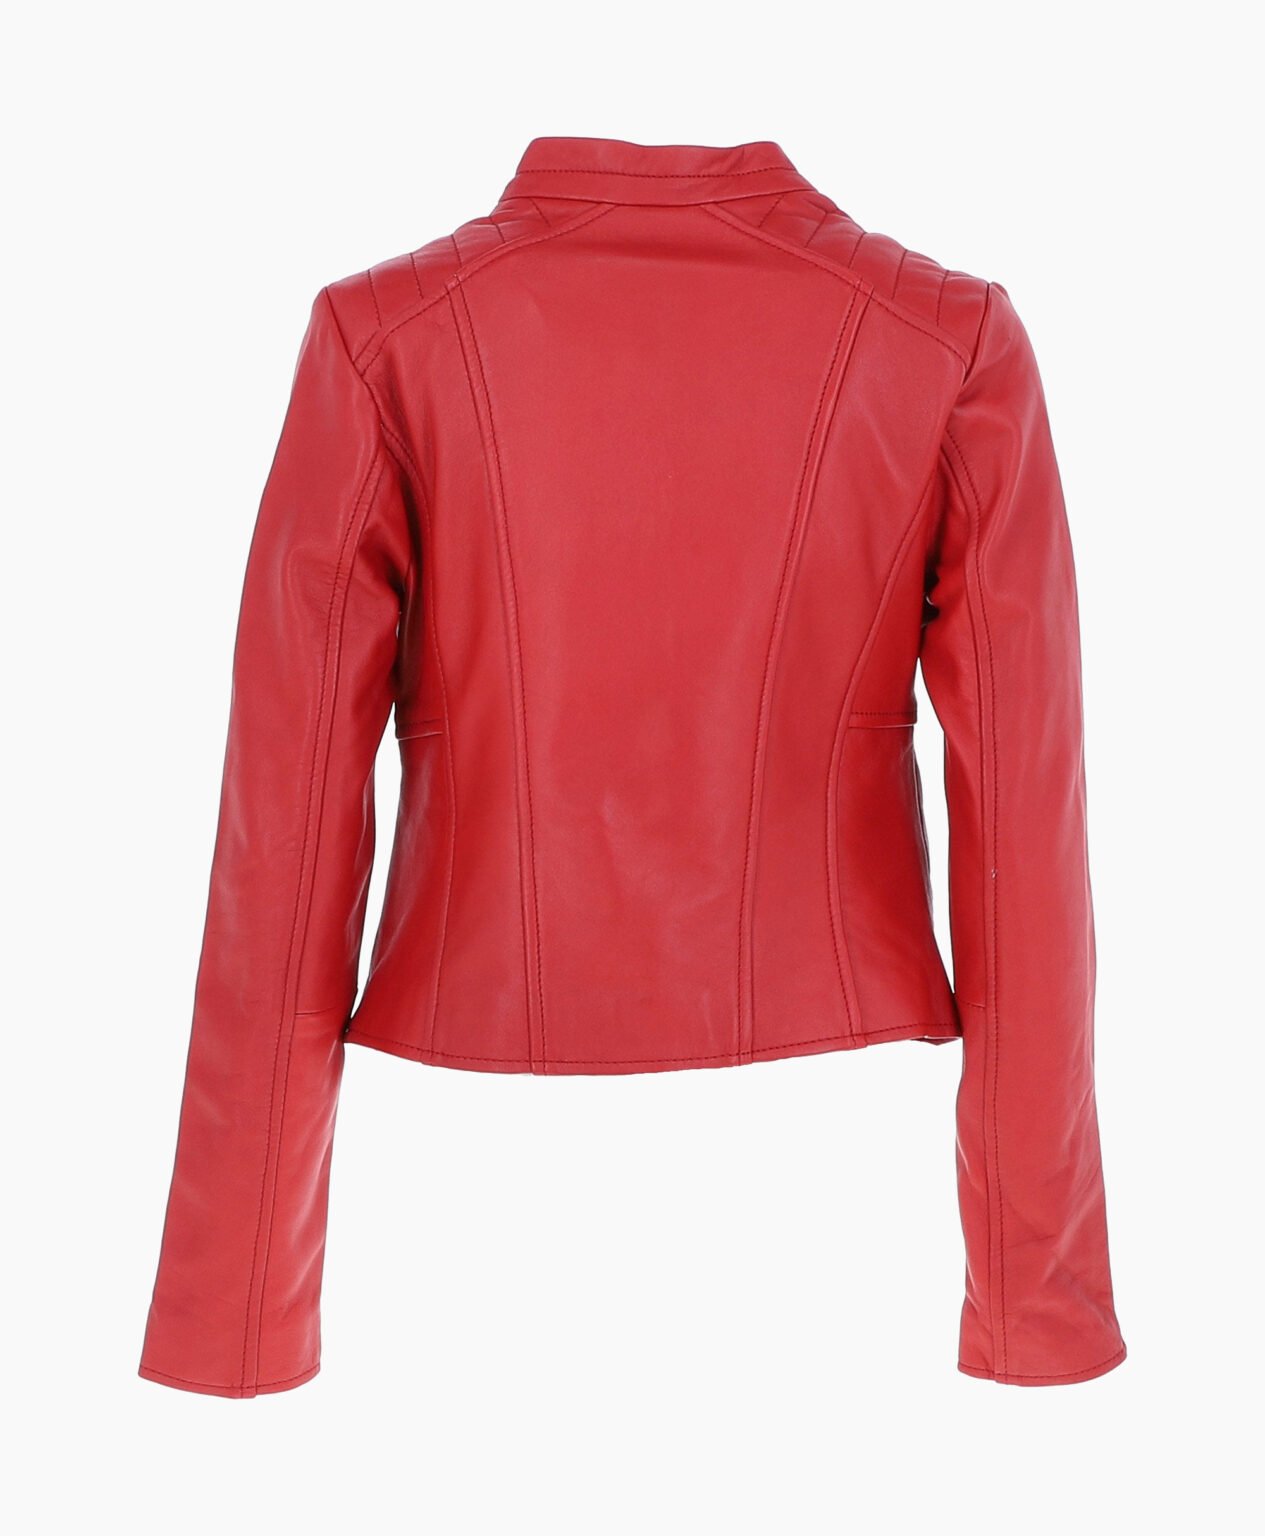 vogue-jacket-leather-biker-jacket-red-ontario-image202